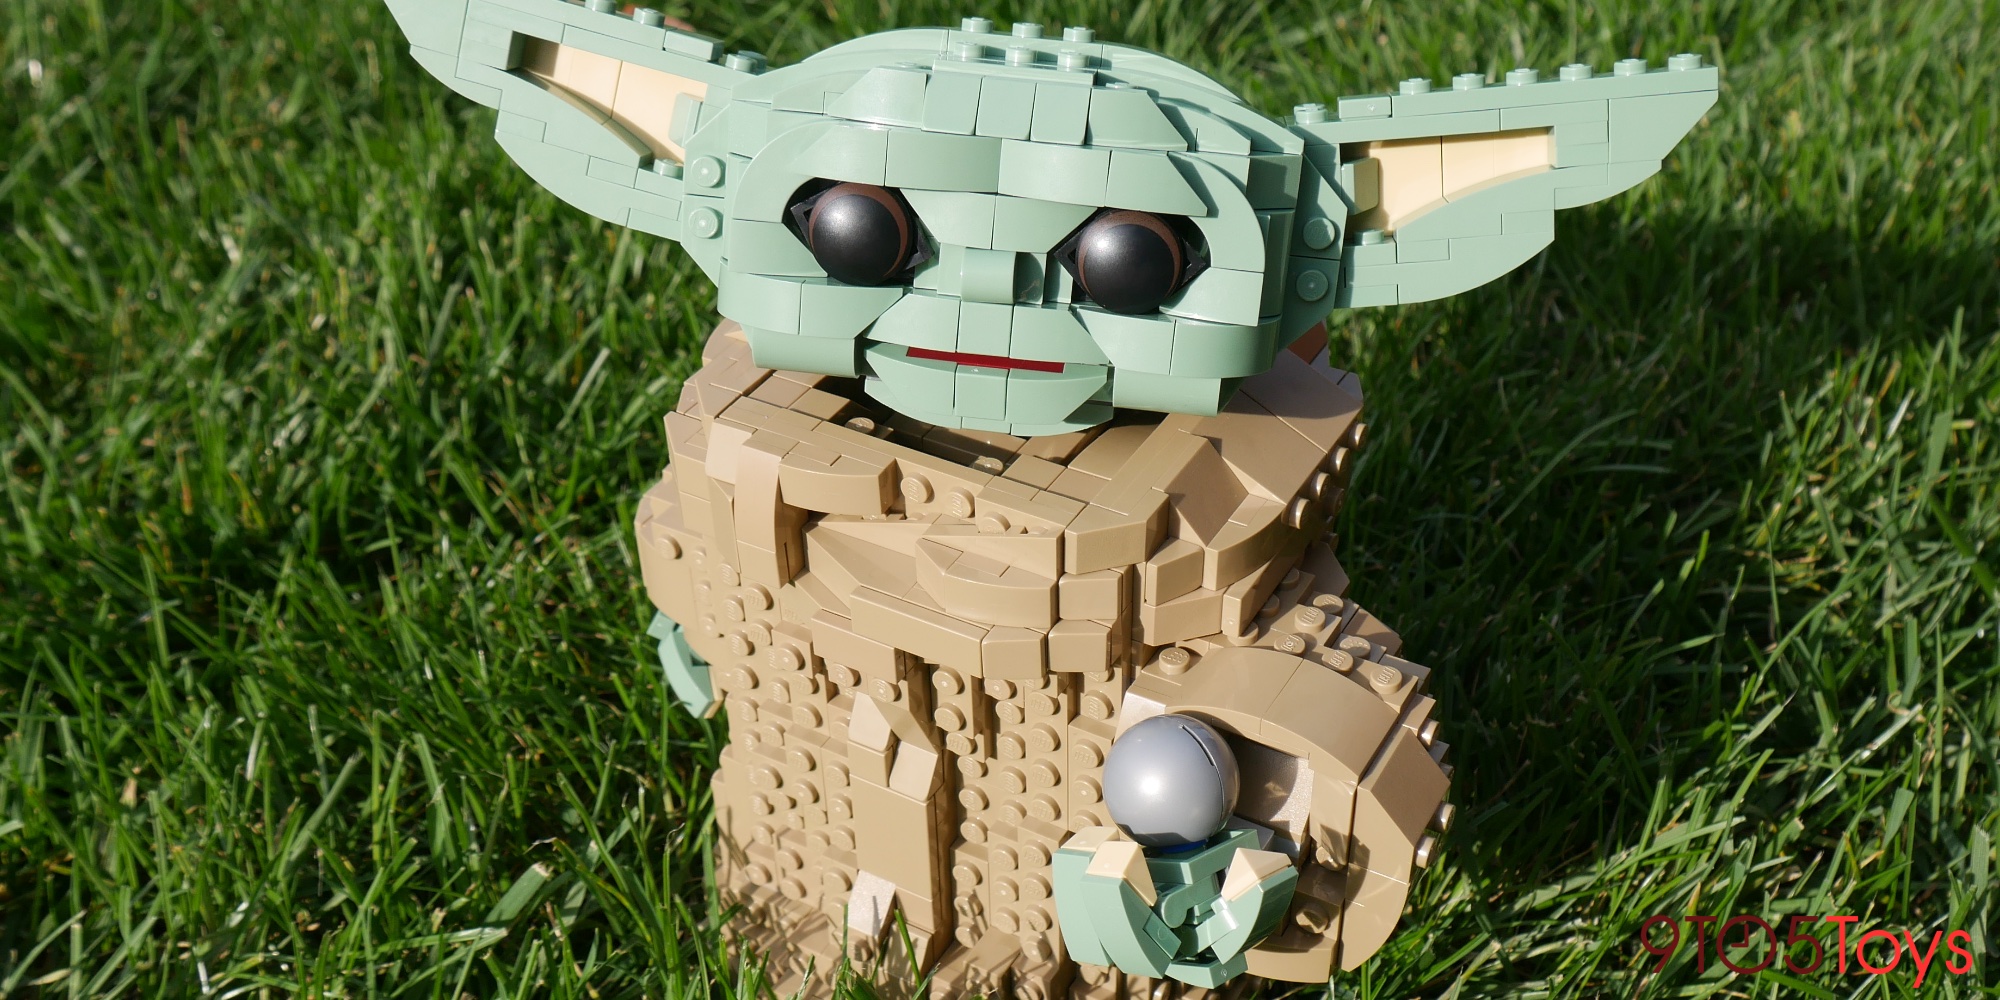 LEGO Baby Yoda review